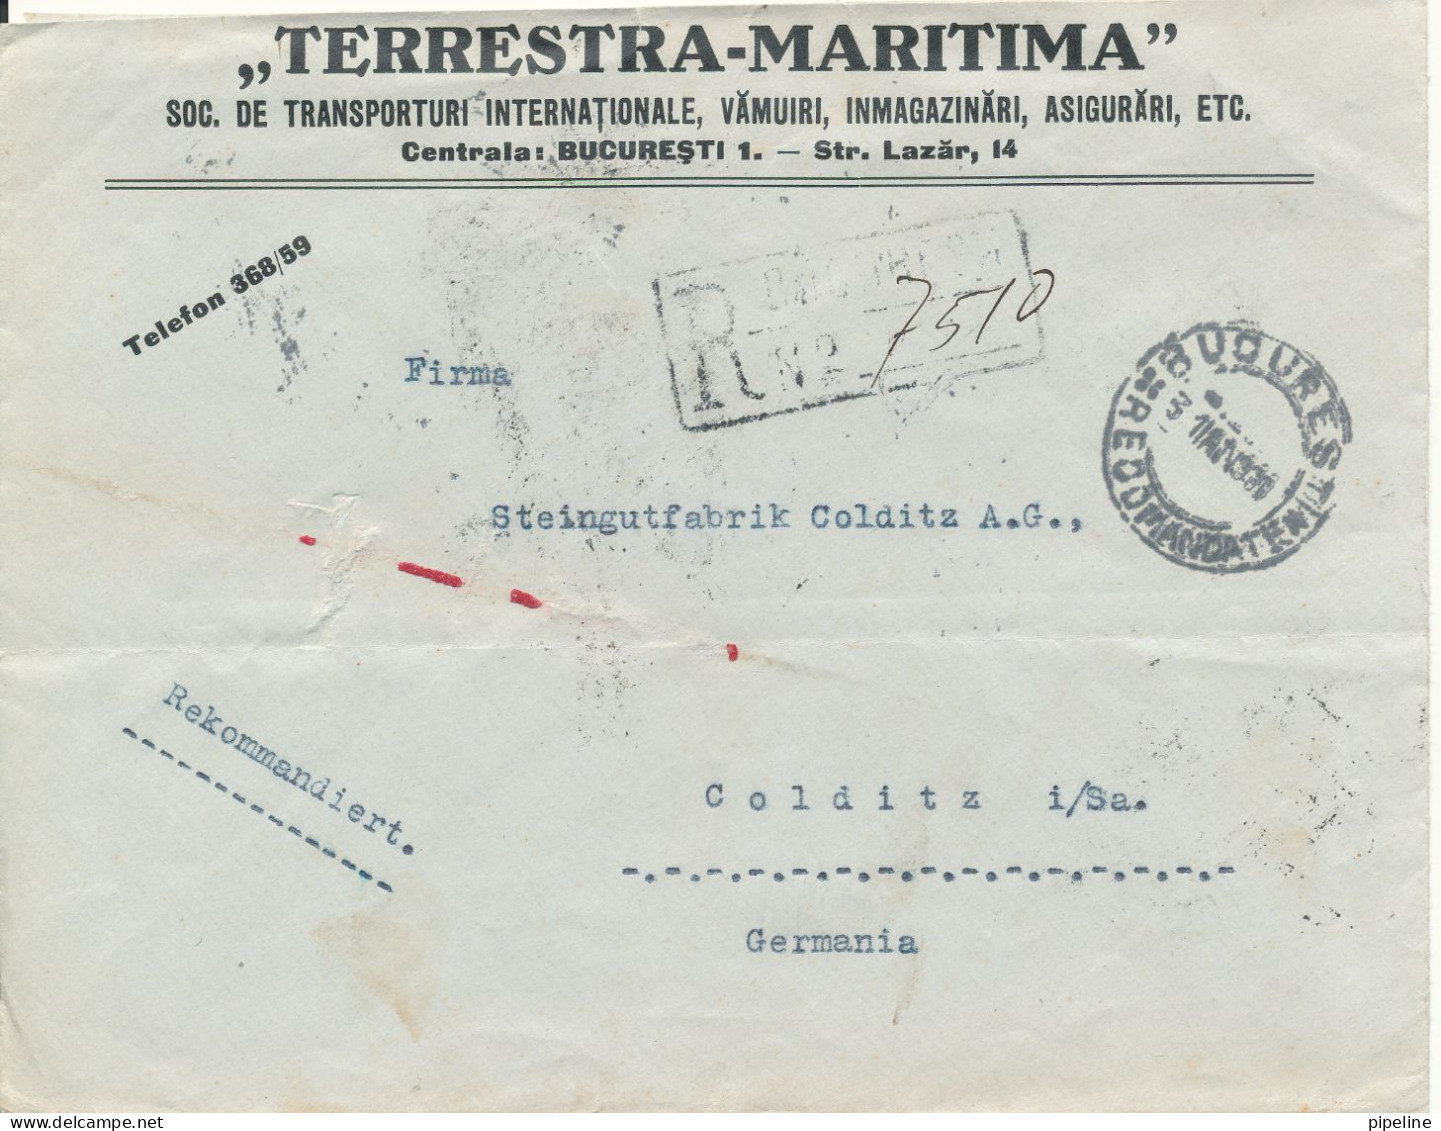 Romania Registered Cover Sent To Germany 31-1-1930 On The Backside Bahnpost Breslau - Beuthen Zug 32 2-2-1930 - Briefe U. Dokumente